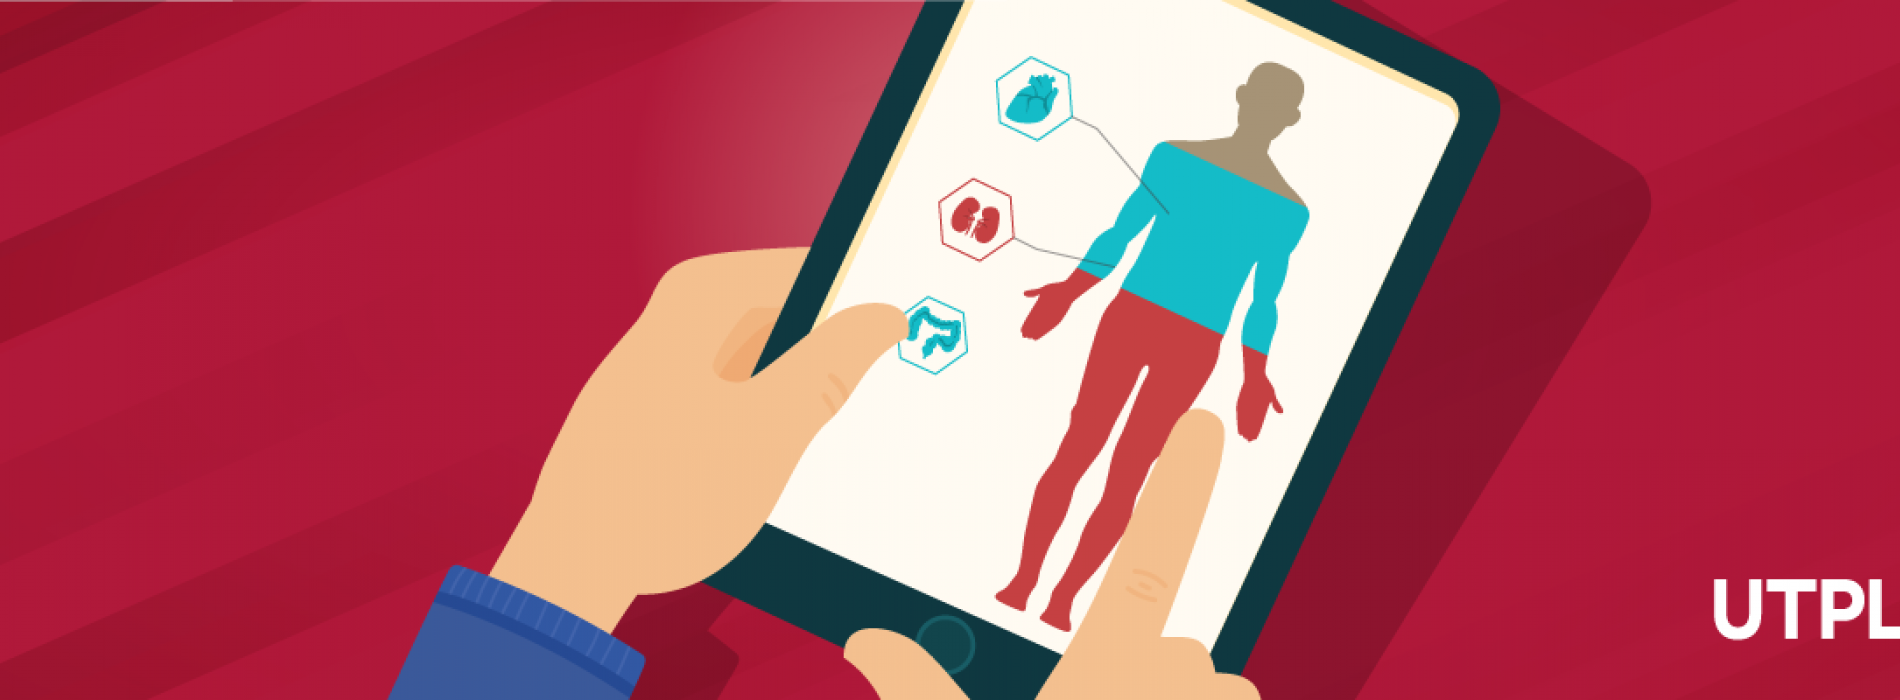 apps móvil para aprender anatomía humana